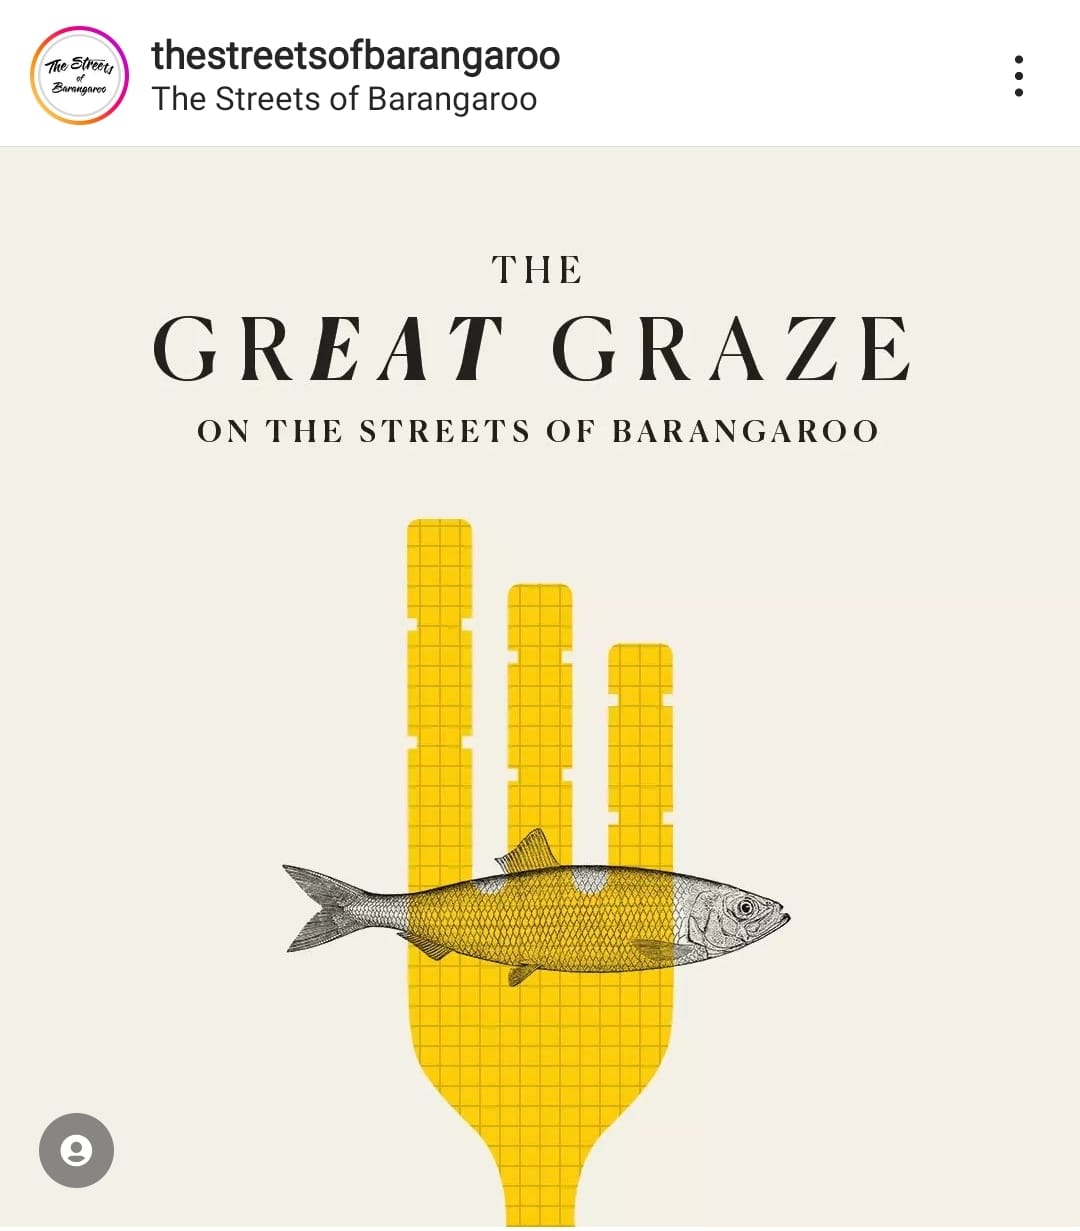 The Great Graze on the streets of Barangaroo 